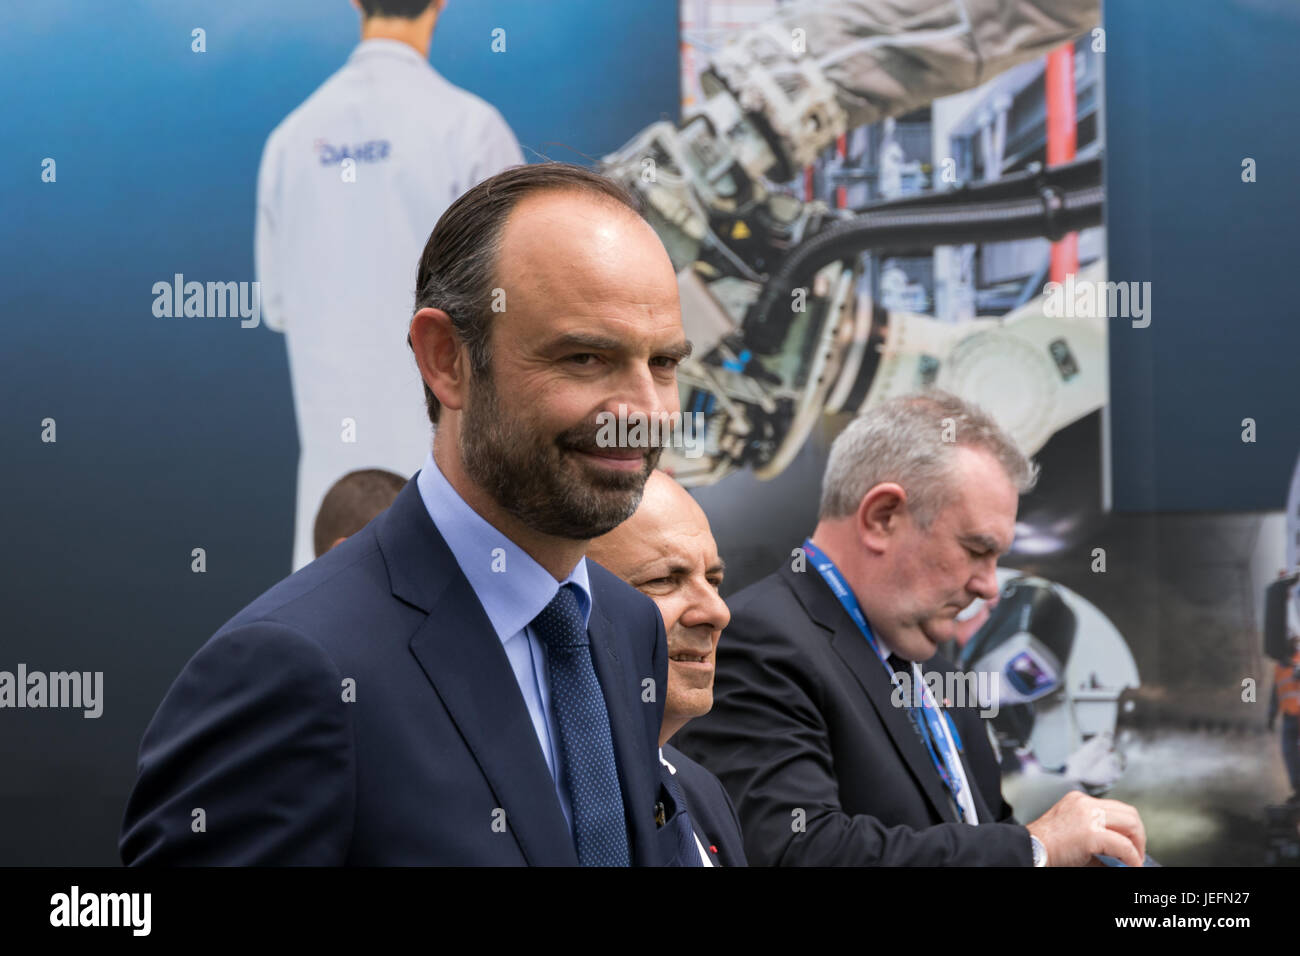 PARIS, FRANCE - JUN 23, 2017: French Prime Minister Edouard Philippe visiting various aerospace companies at the Paris Air Show 2017 Stock Photo